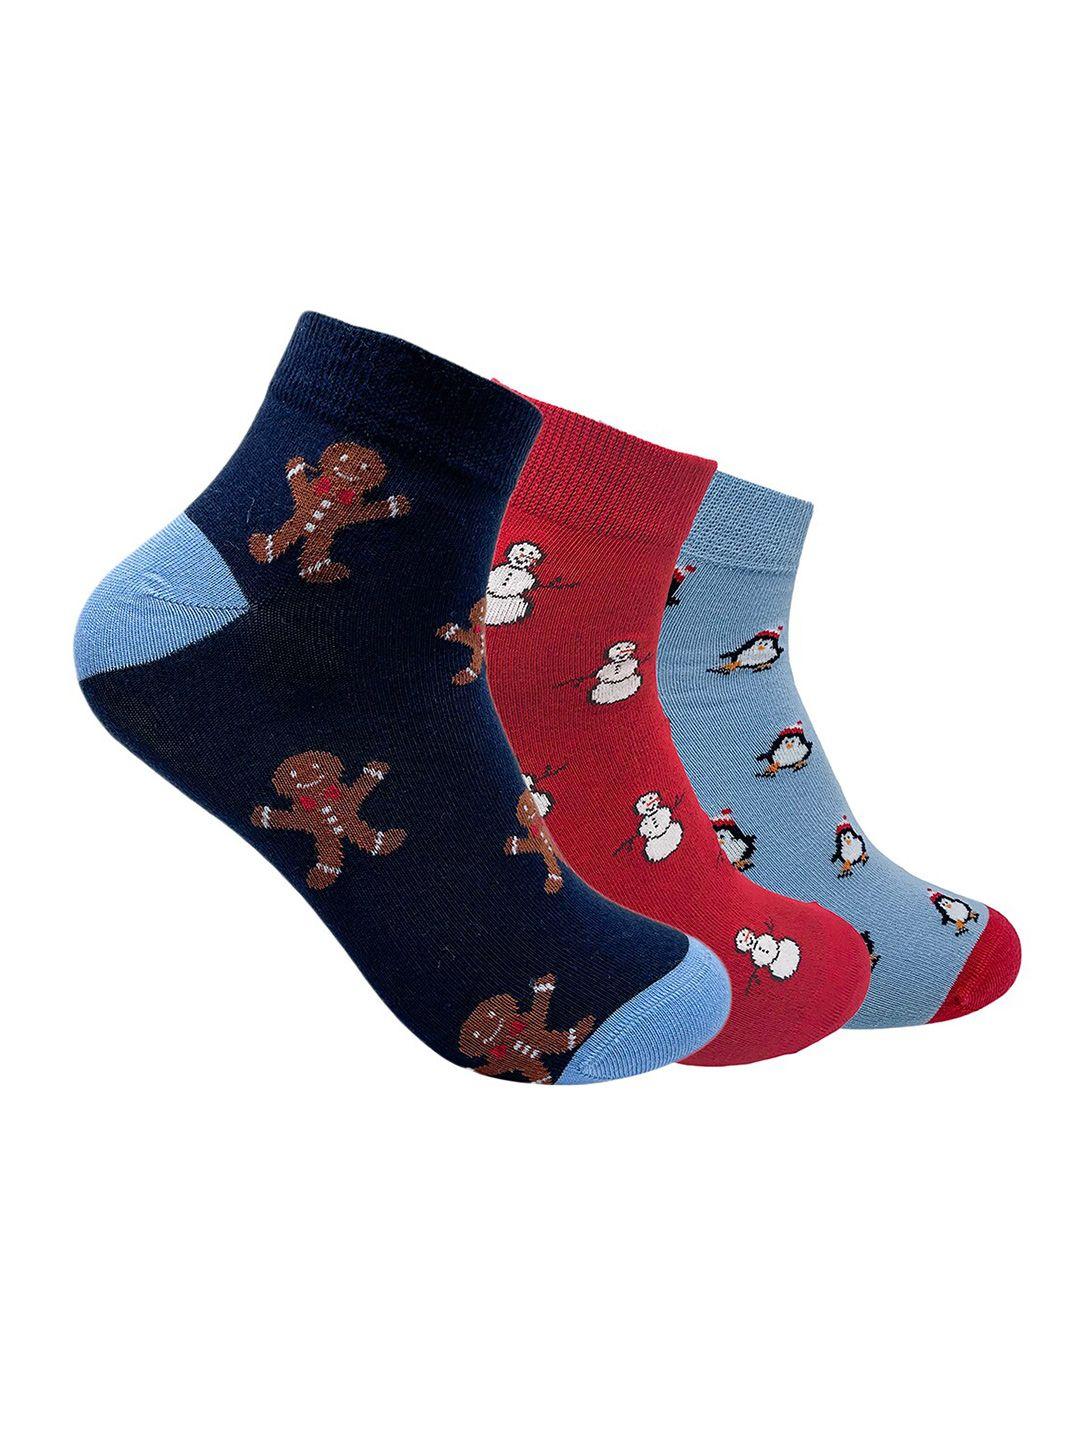 mint-&-oak-men-pack-of-3-patterned-ankle-length-socks